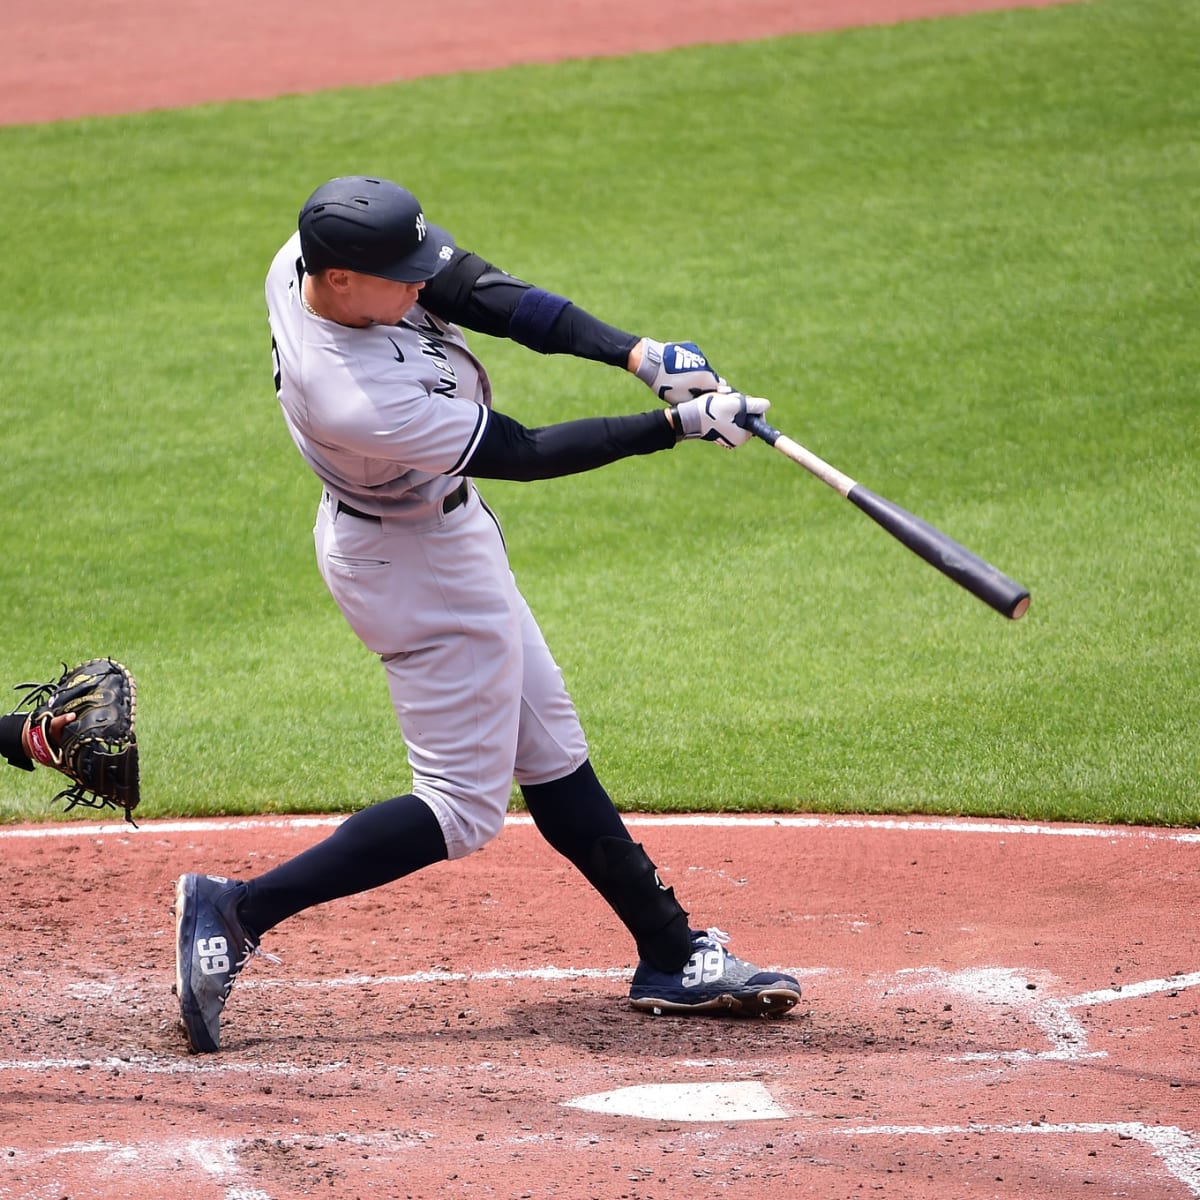 Yankees right fielder Aaron Judge hits his 20th home run